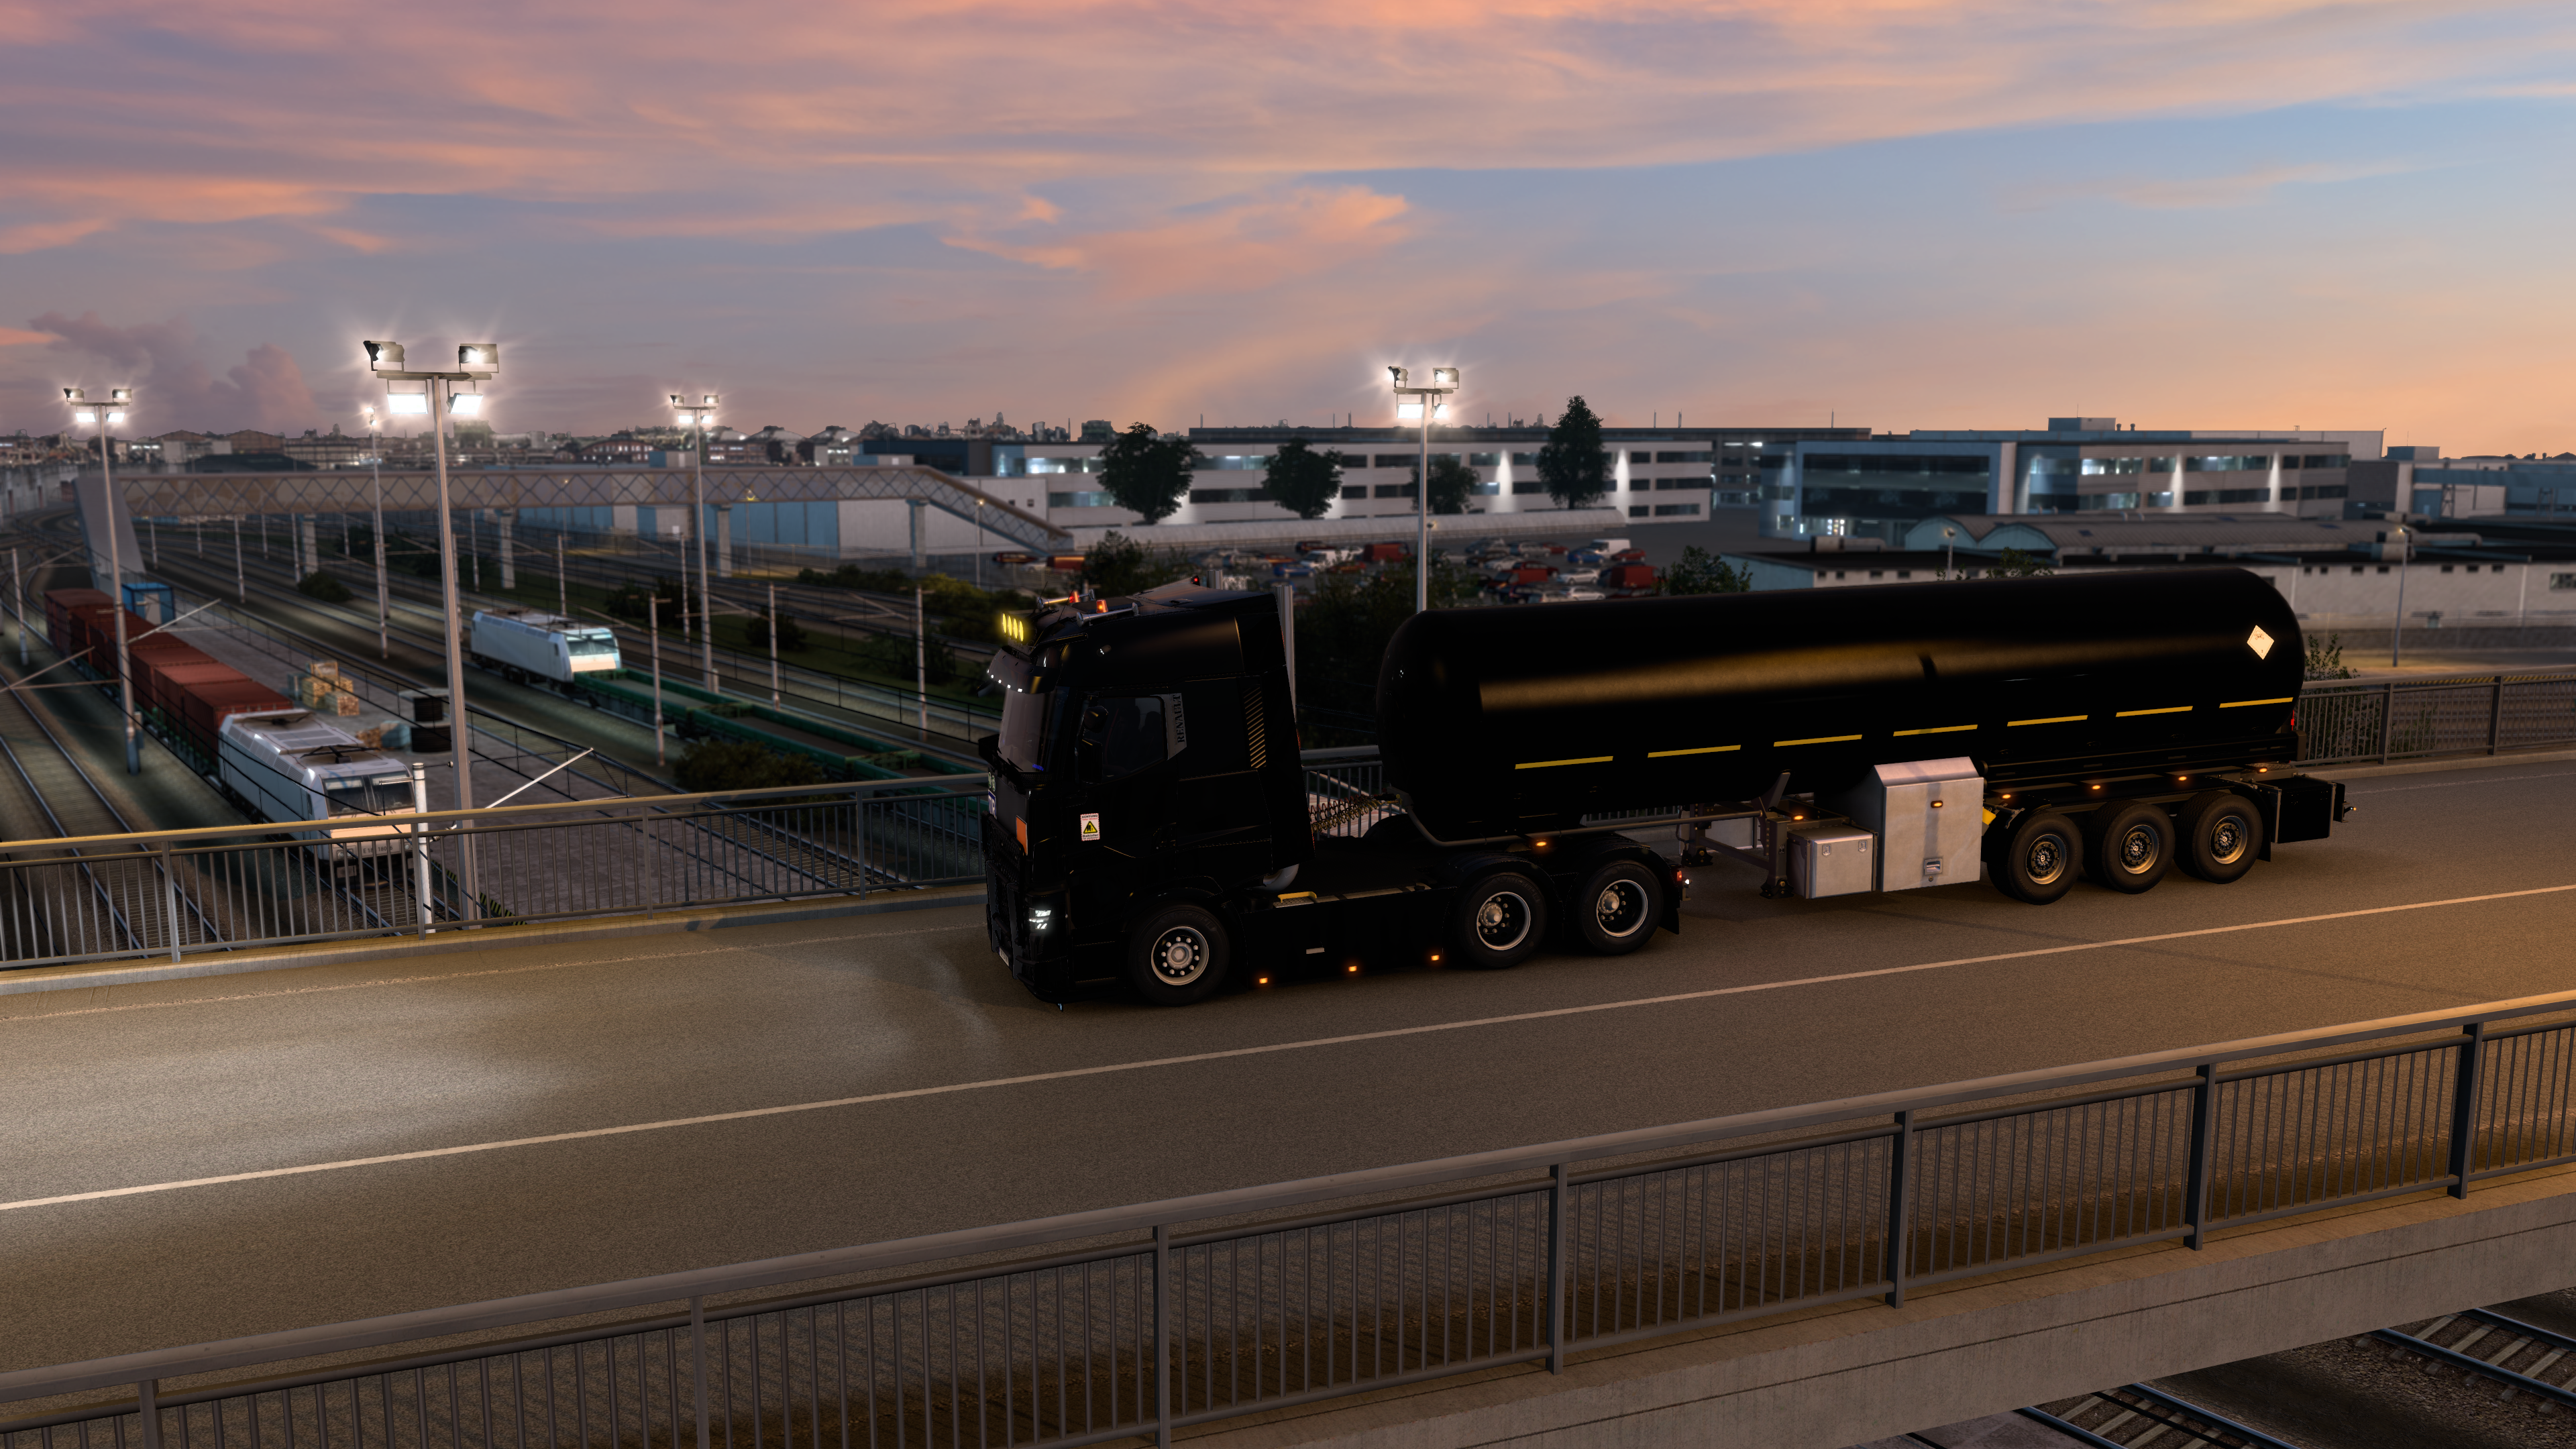 General 3840x2160 Renault truck Euro Truck Simulator 2 sunset glow vehicle road headlights video games CGI sky clouds